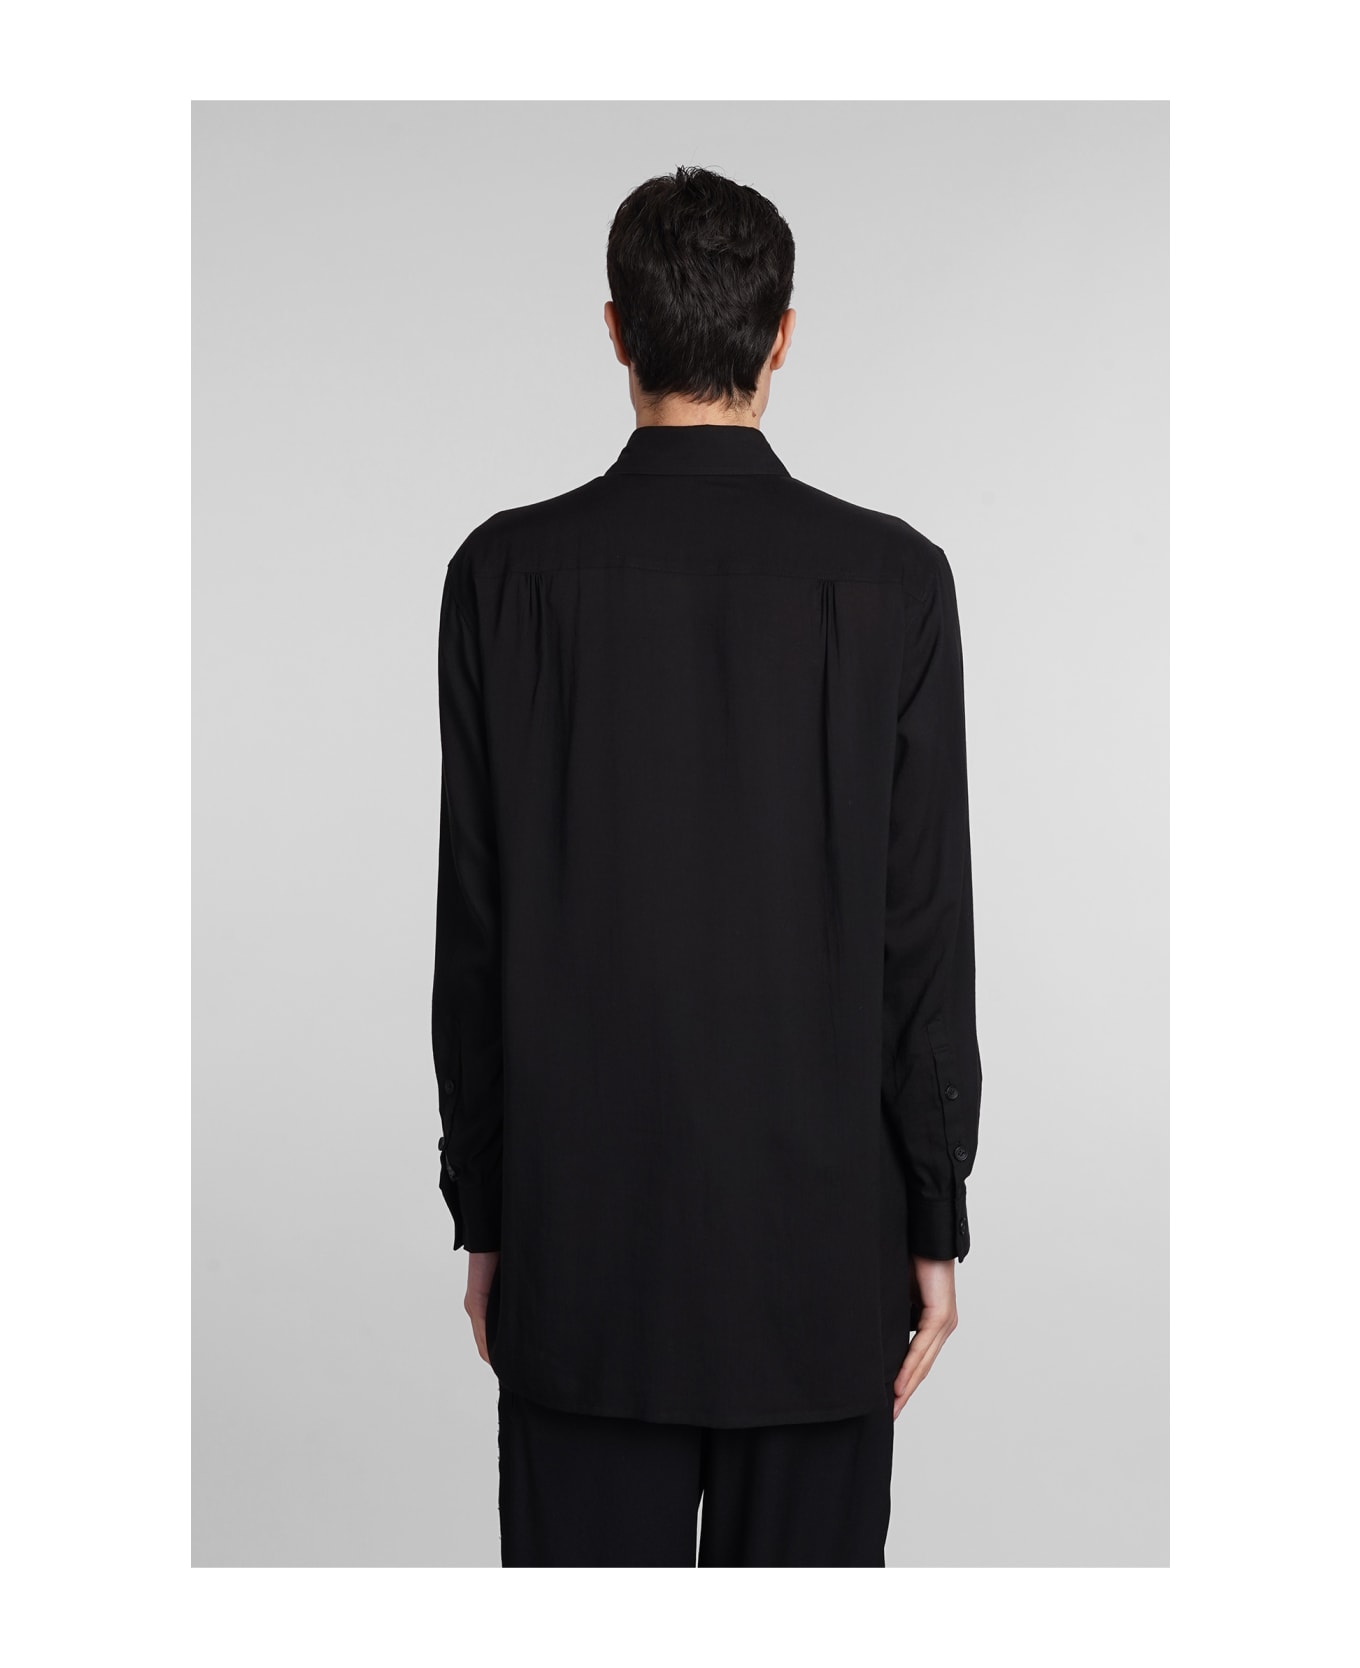 Yohji Yamamoto Shirt In Black Cotton - black